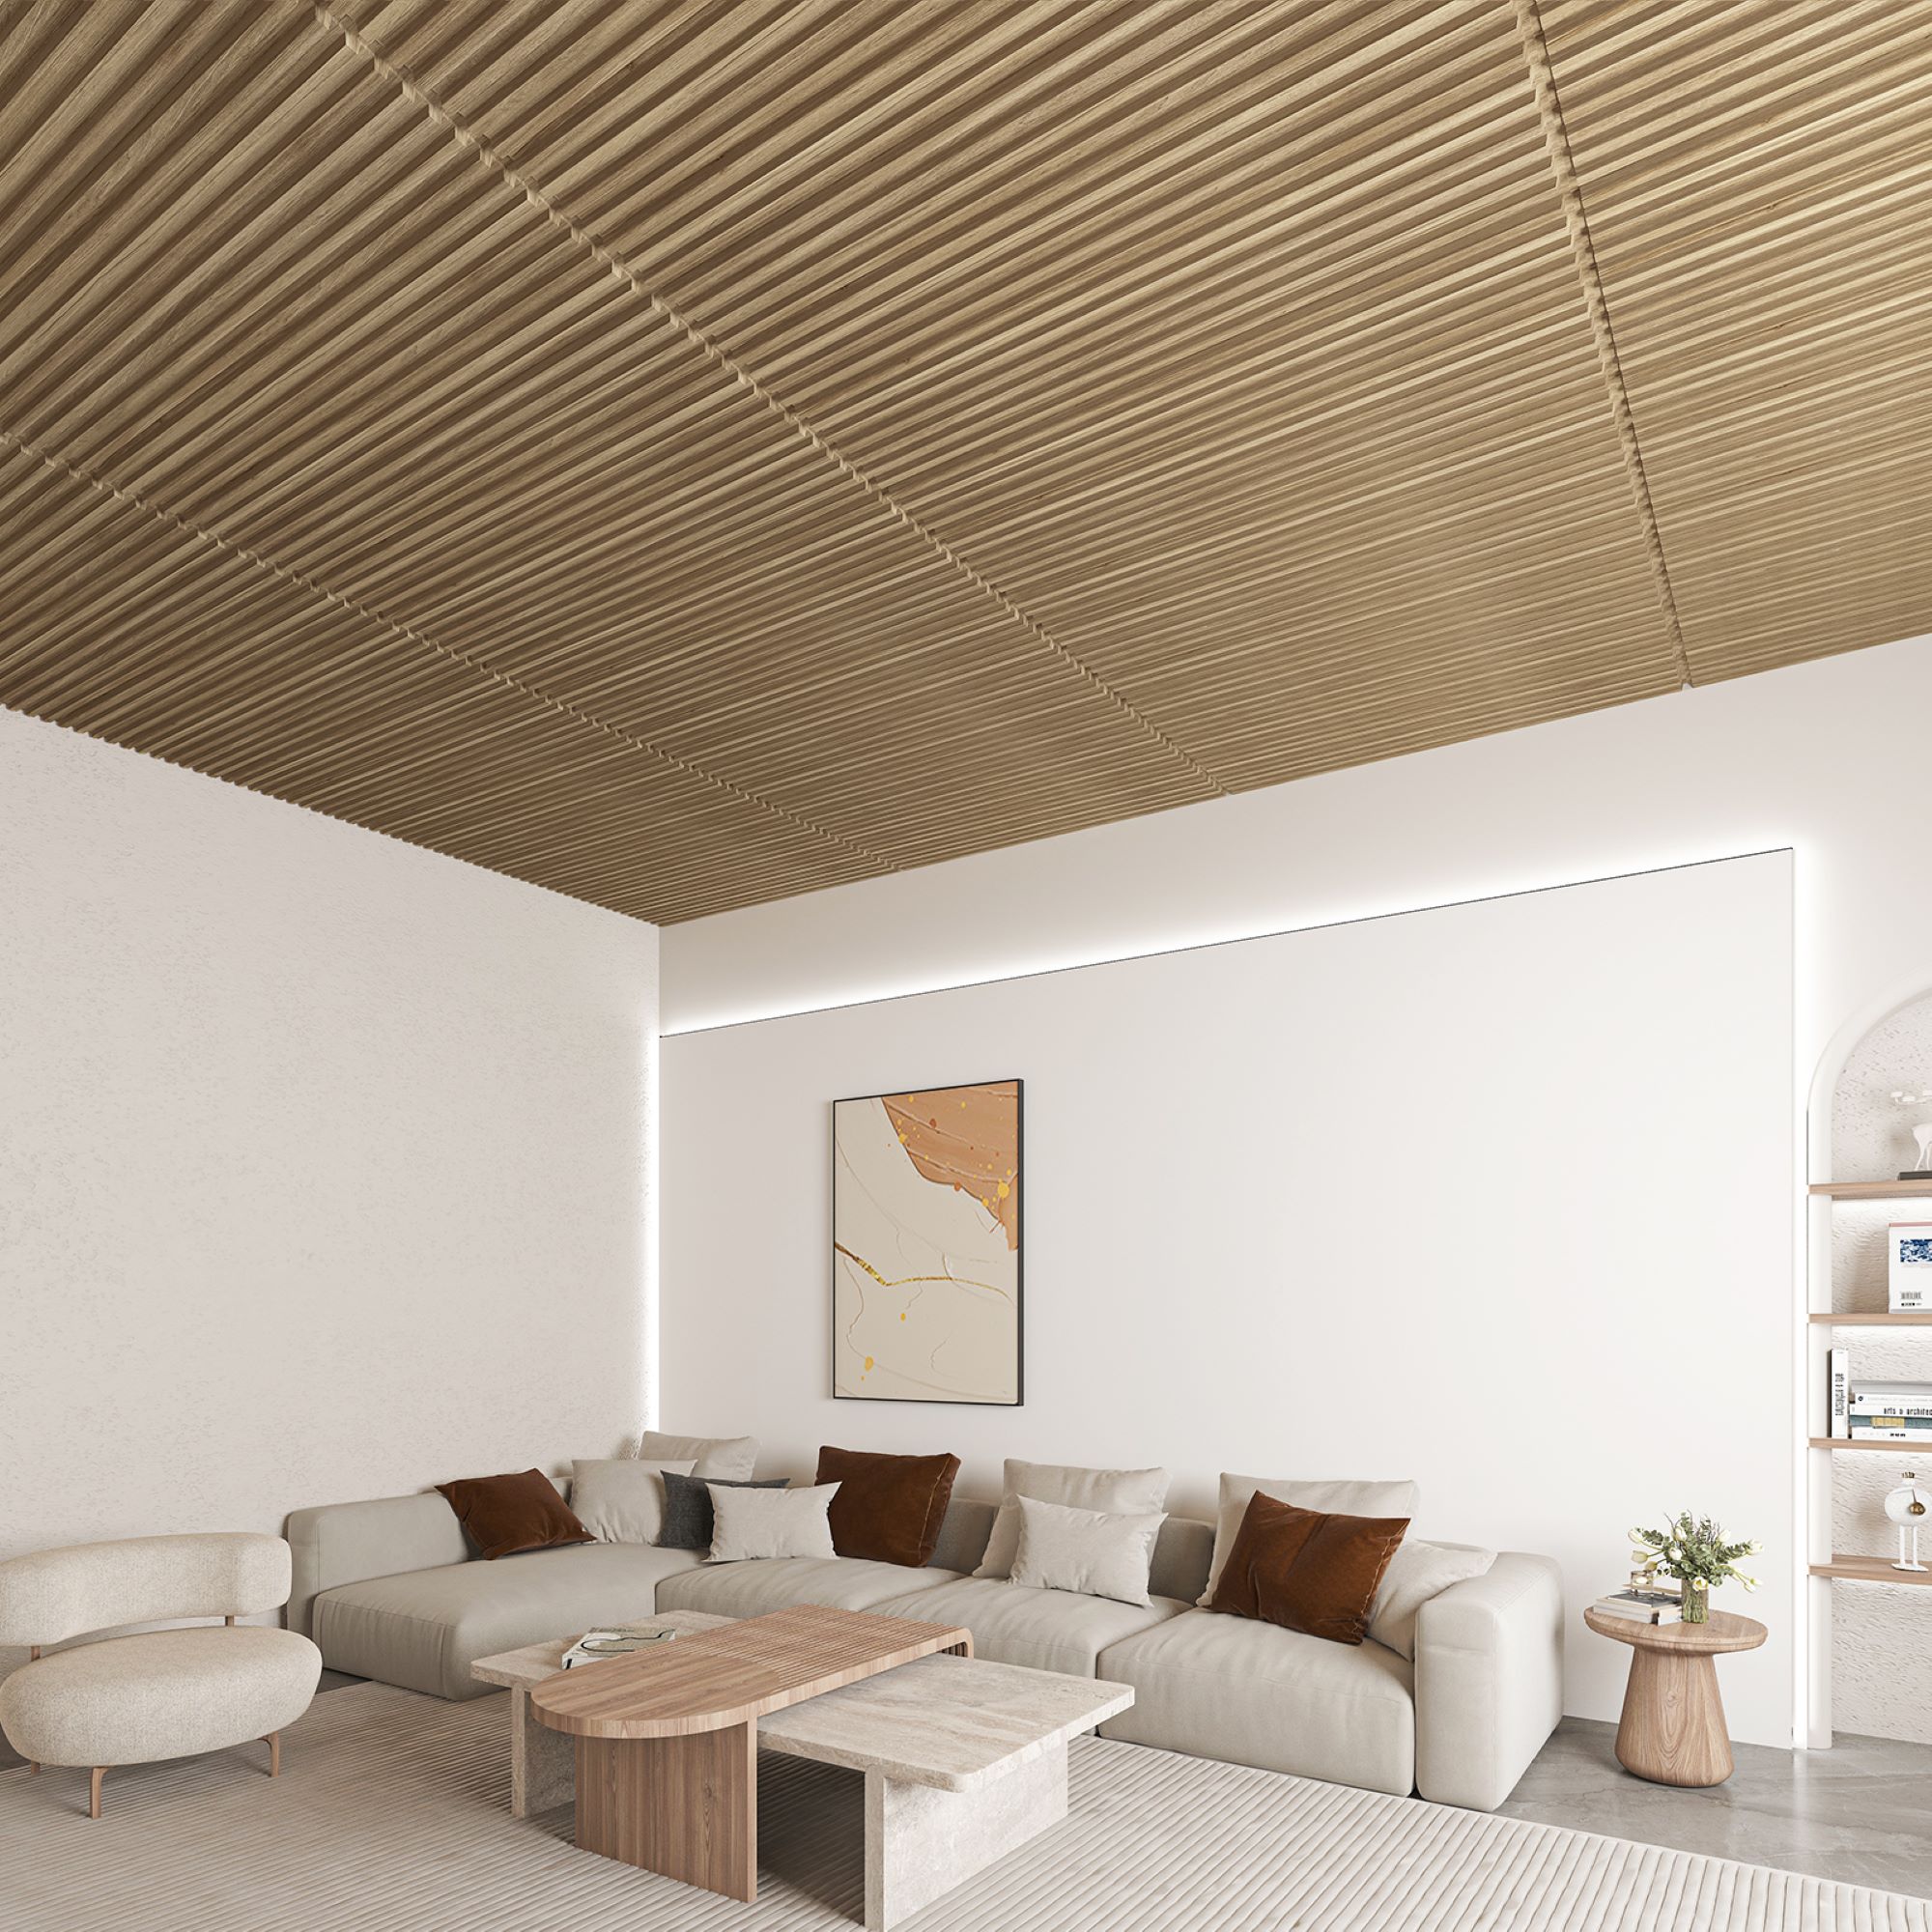 Art3d 12-Pack Slat Design 3D Wall Panels for Interior Wall Decor, 2x4 ...